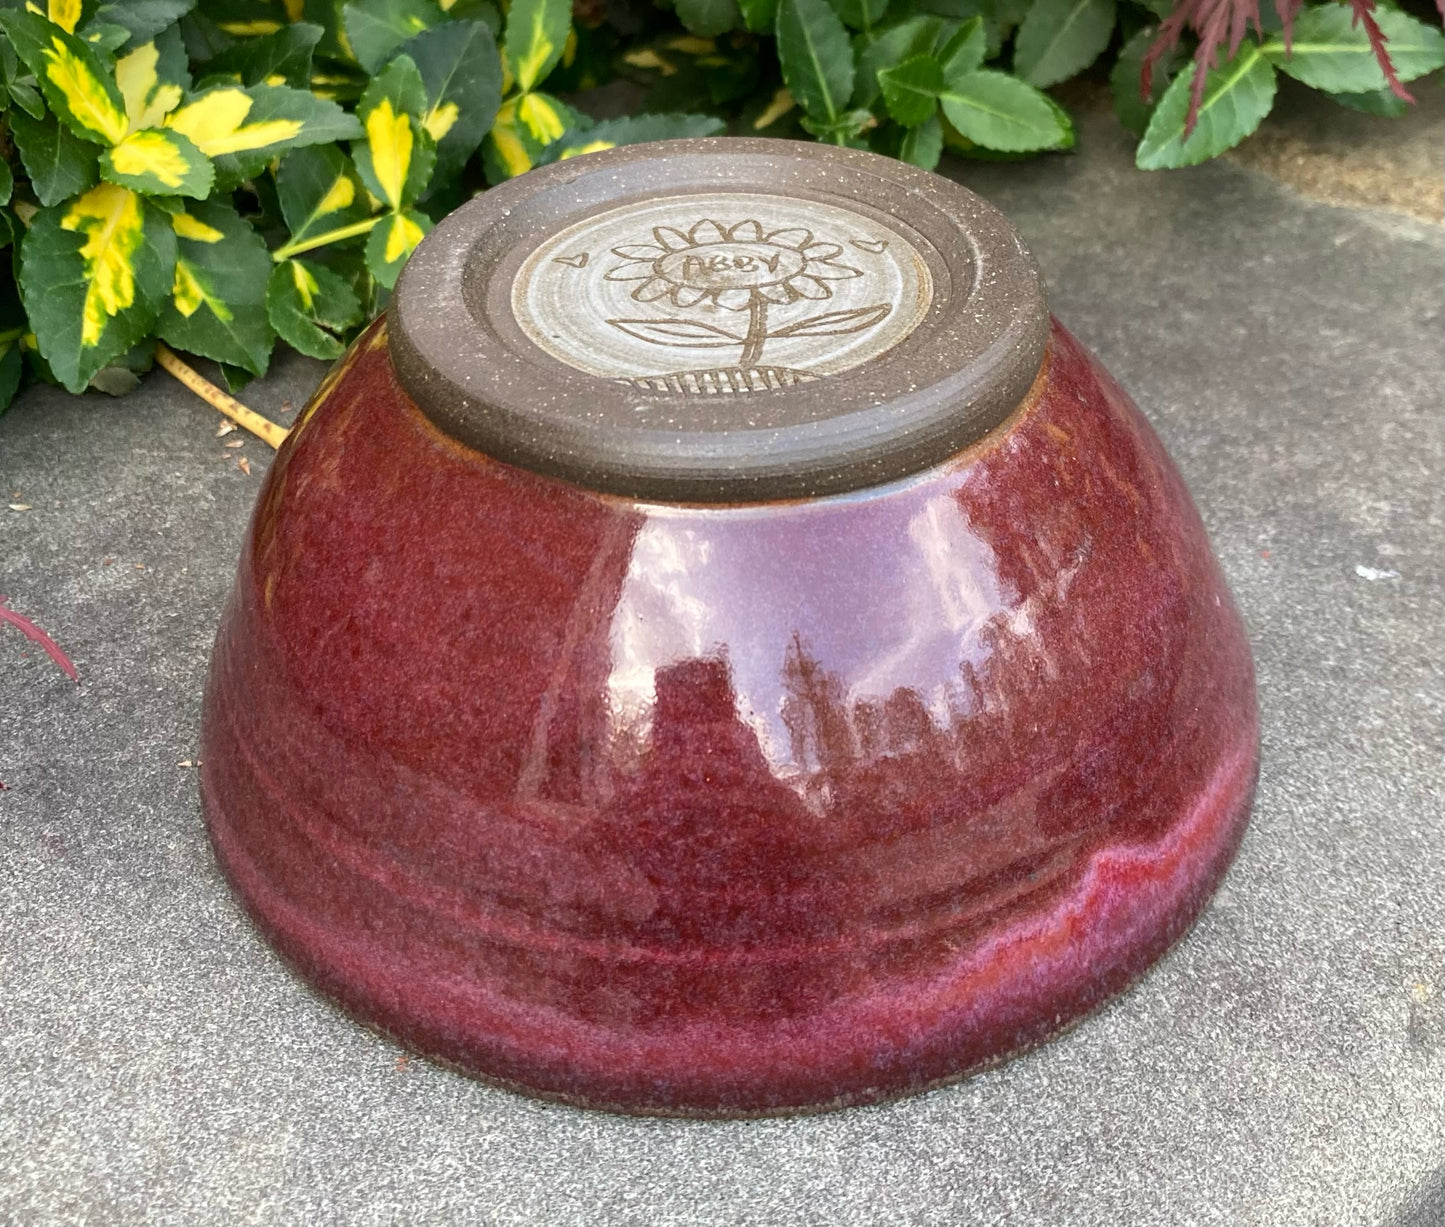 Medium Small Red Bowl